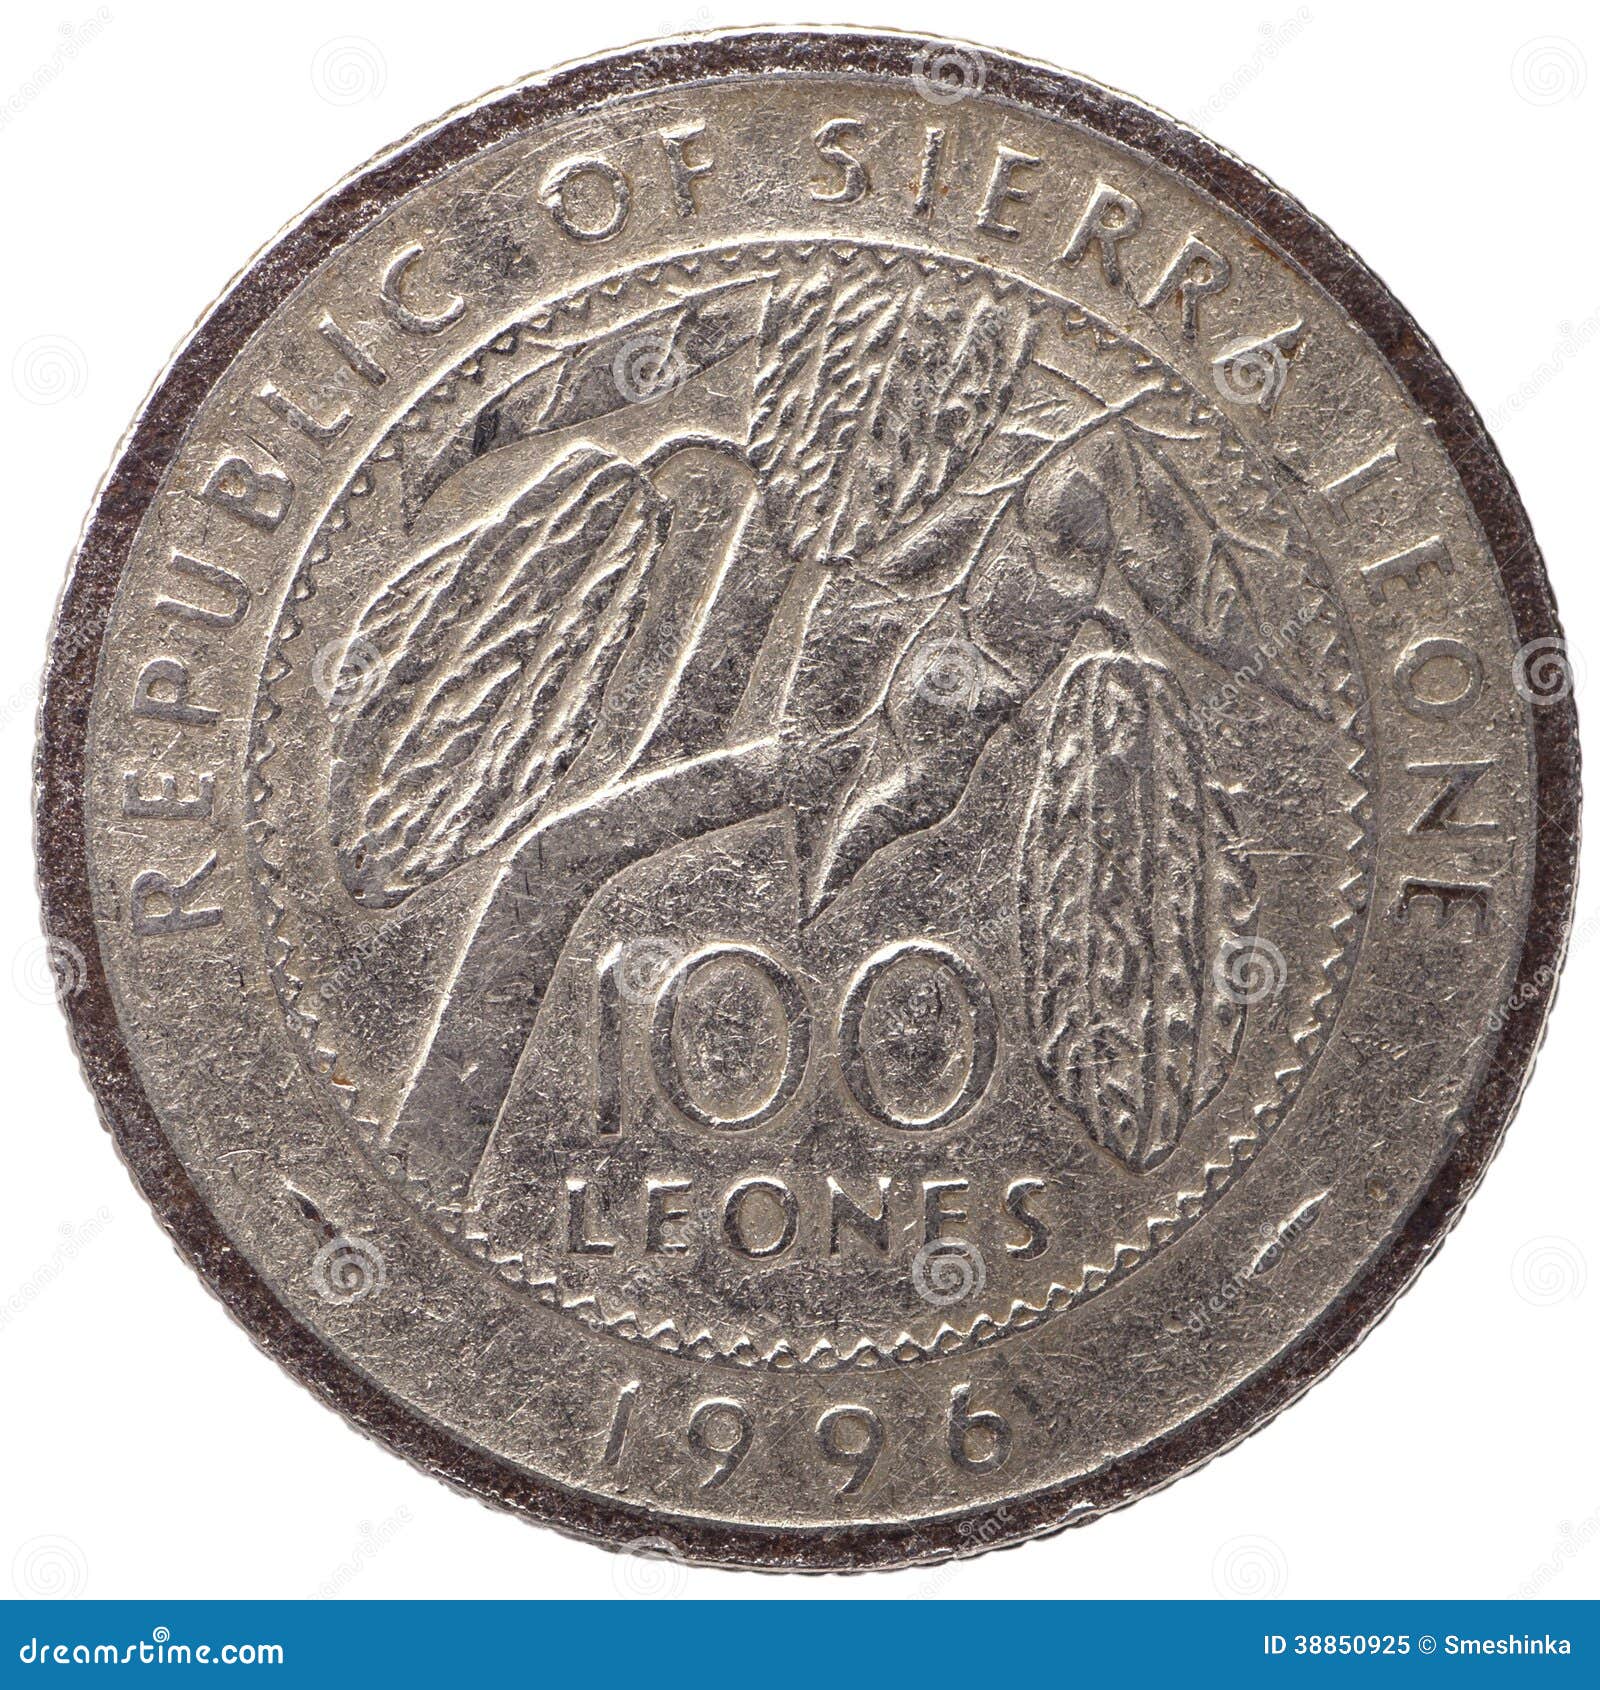 100 sierra leonean leones coin, 1996, reverse